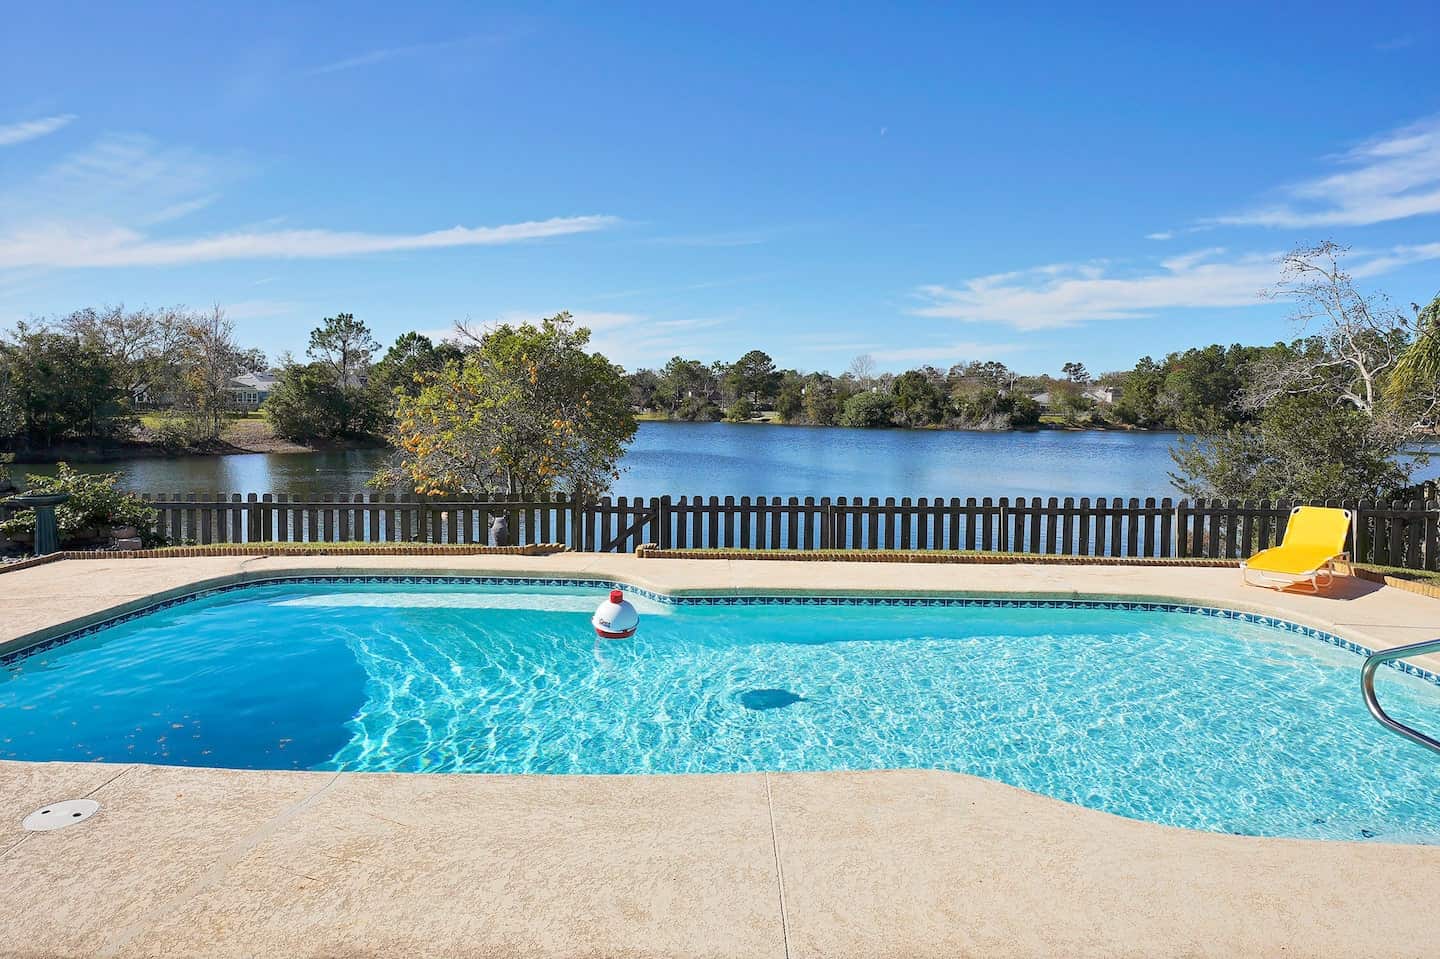 Image of Airbnb rental in Jacksonville, Florida